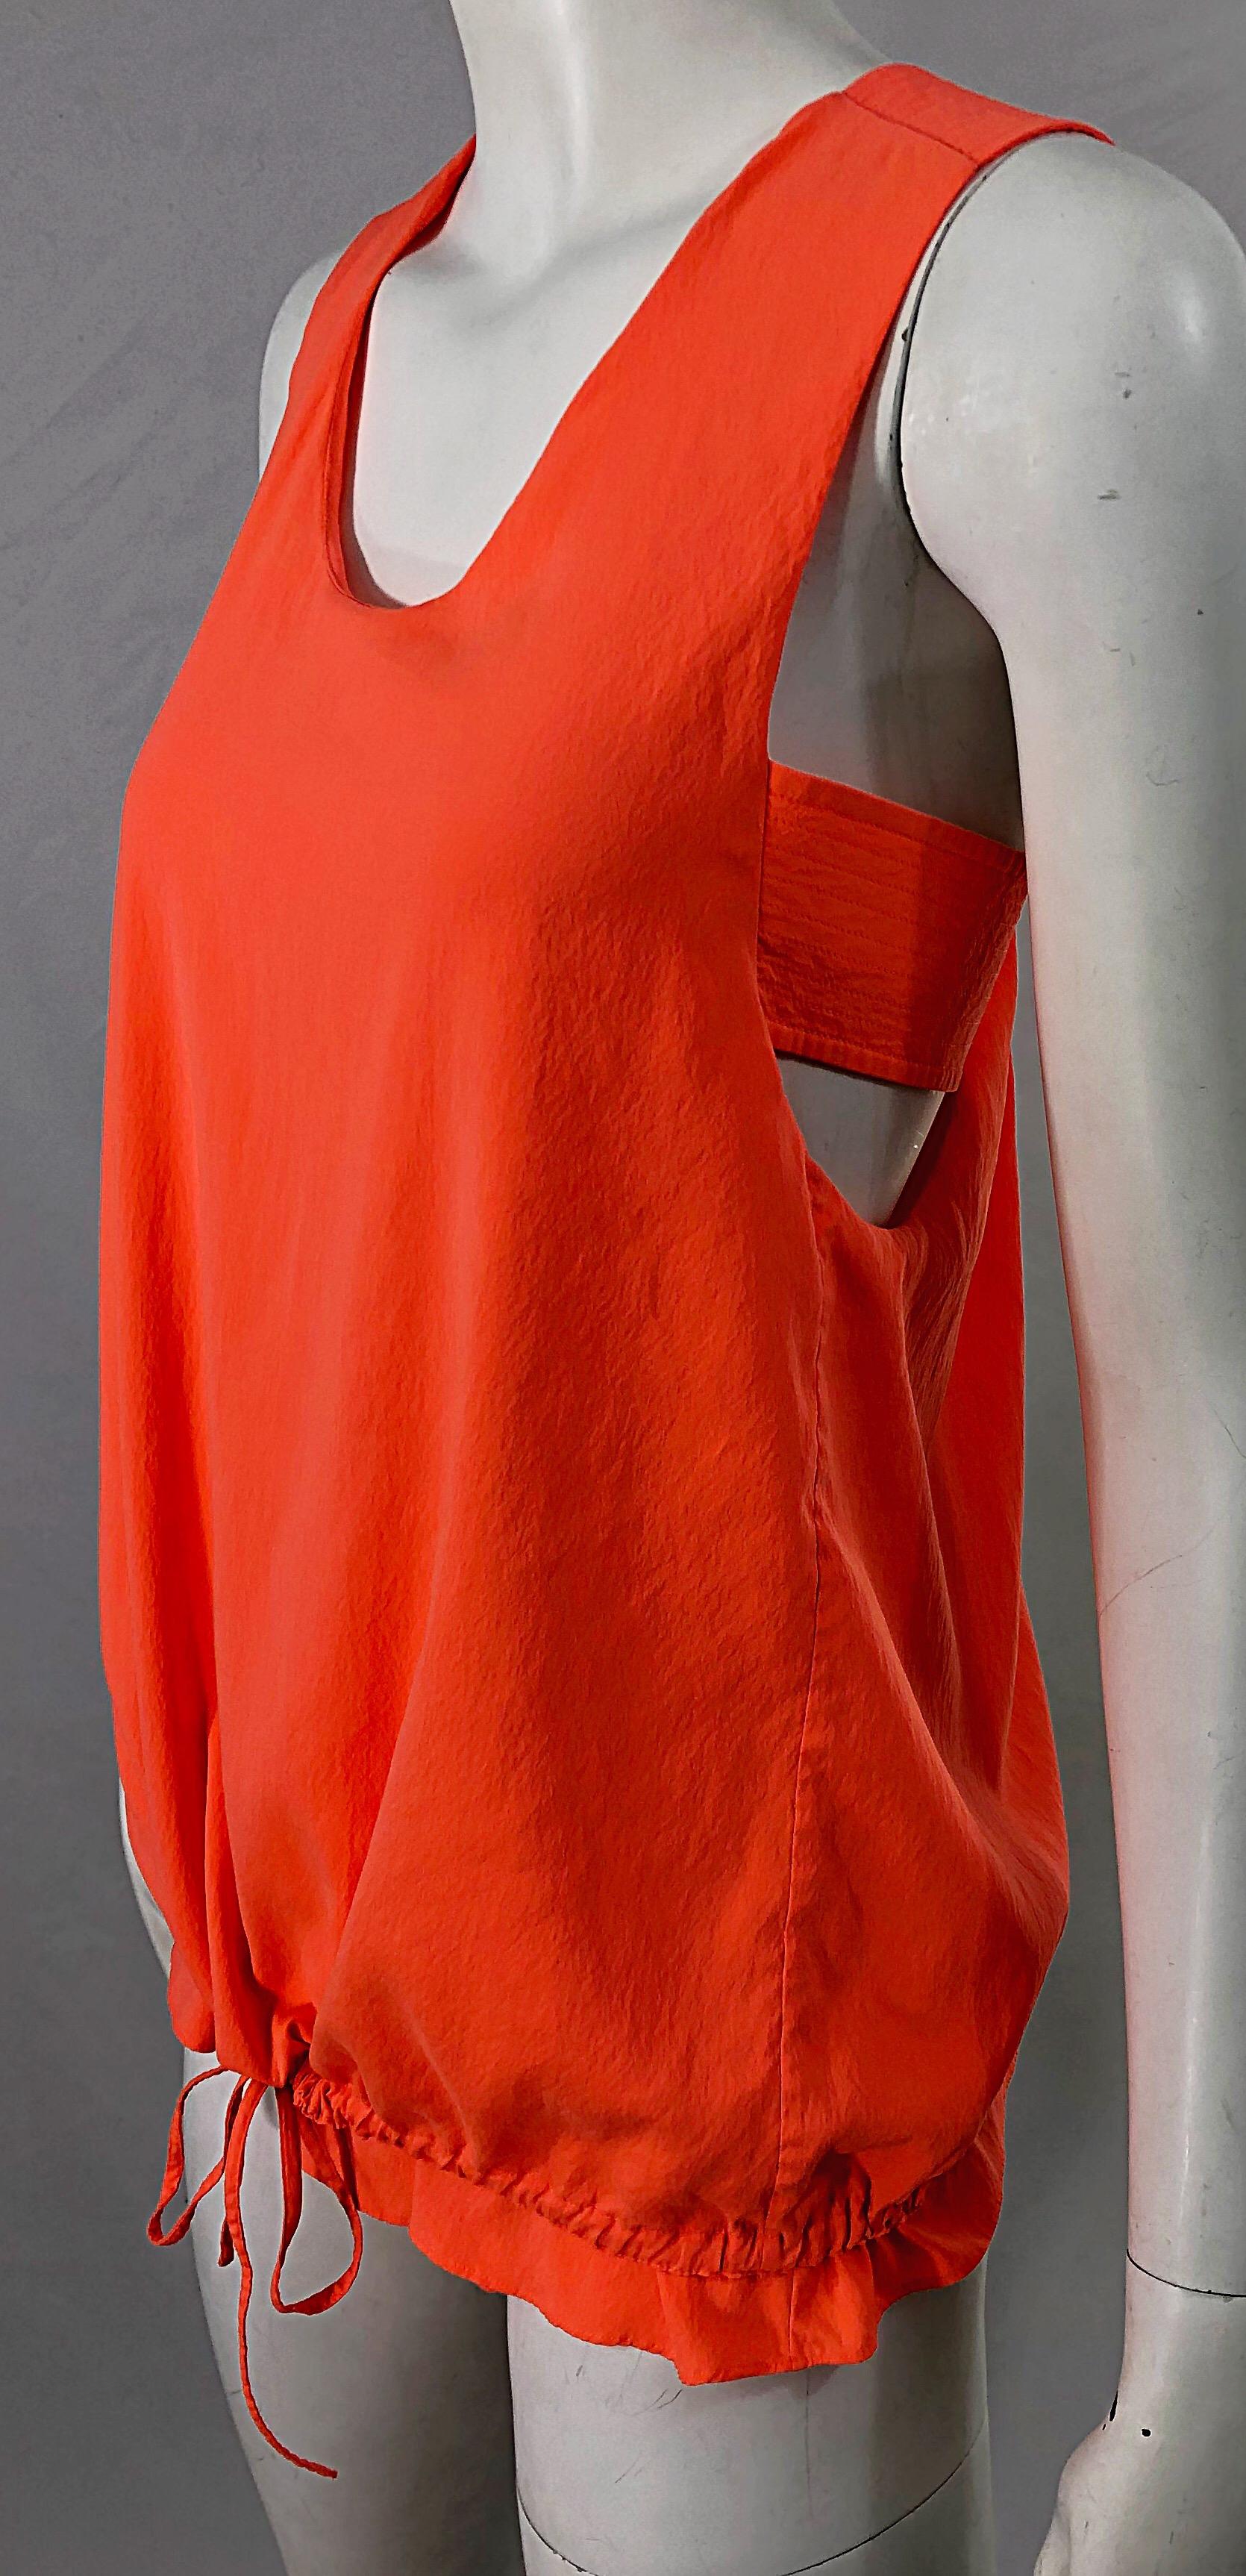 Chloe Spring Summer 2013 Clare Waight Keller Orange Fizz Sleeveless Silk Top  For Sale 1